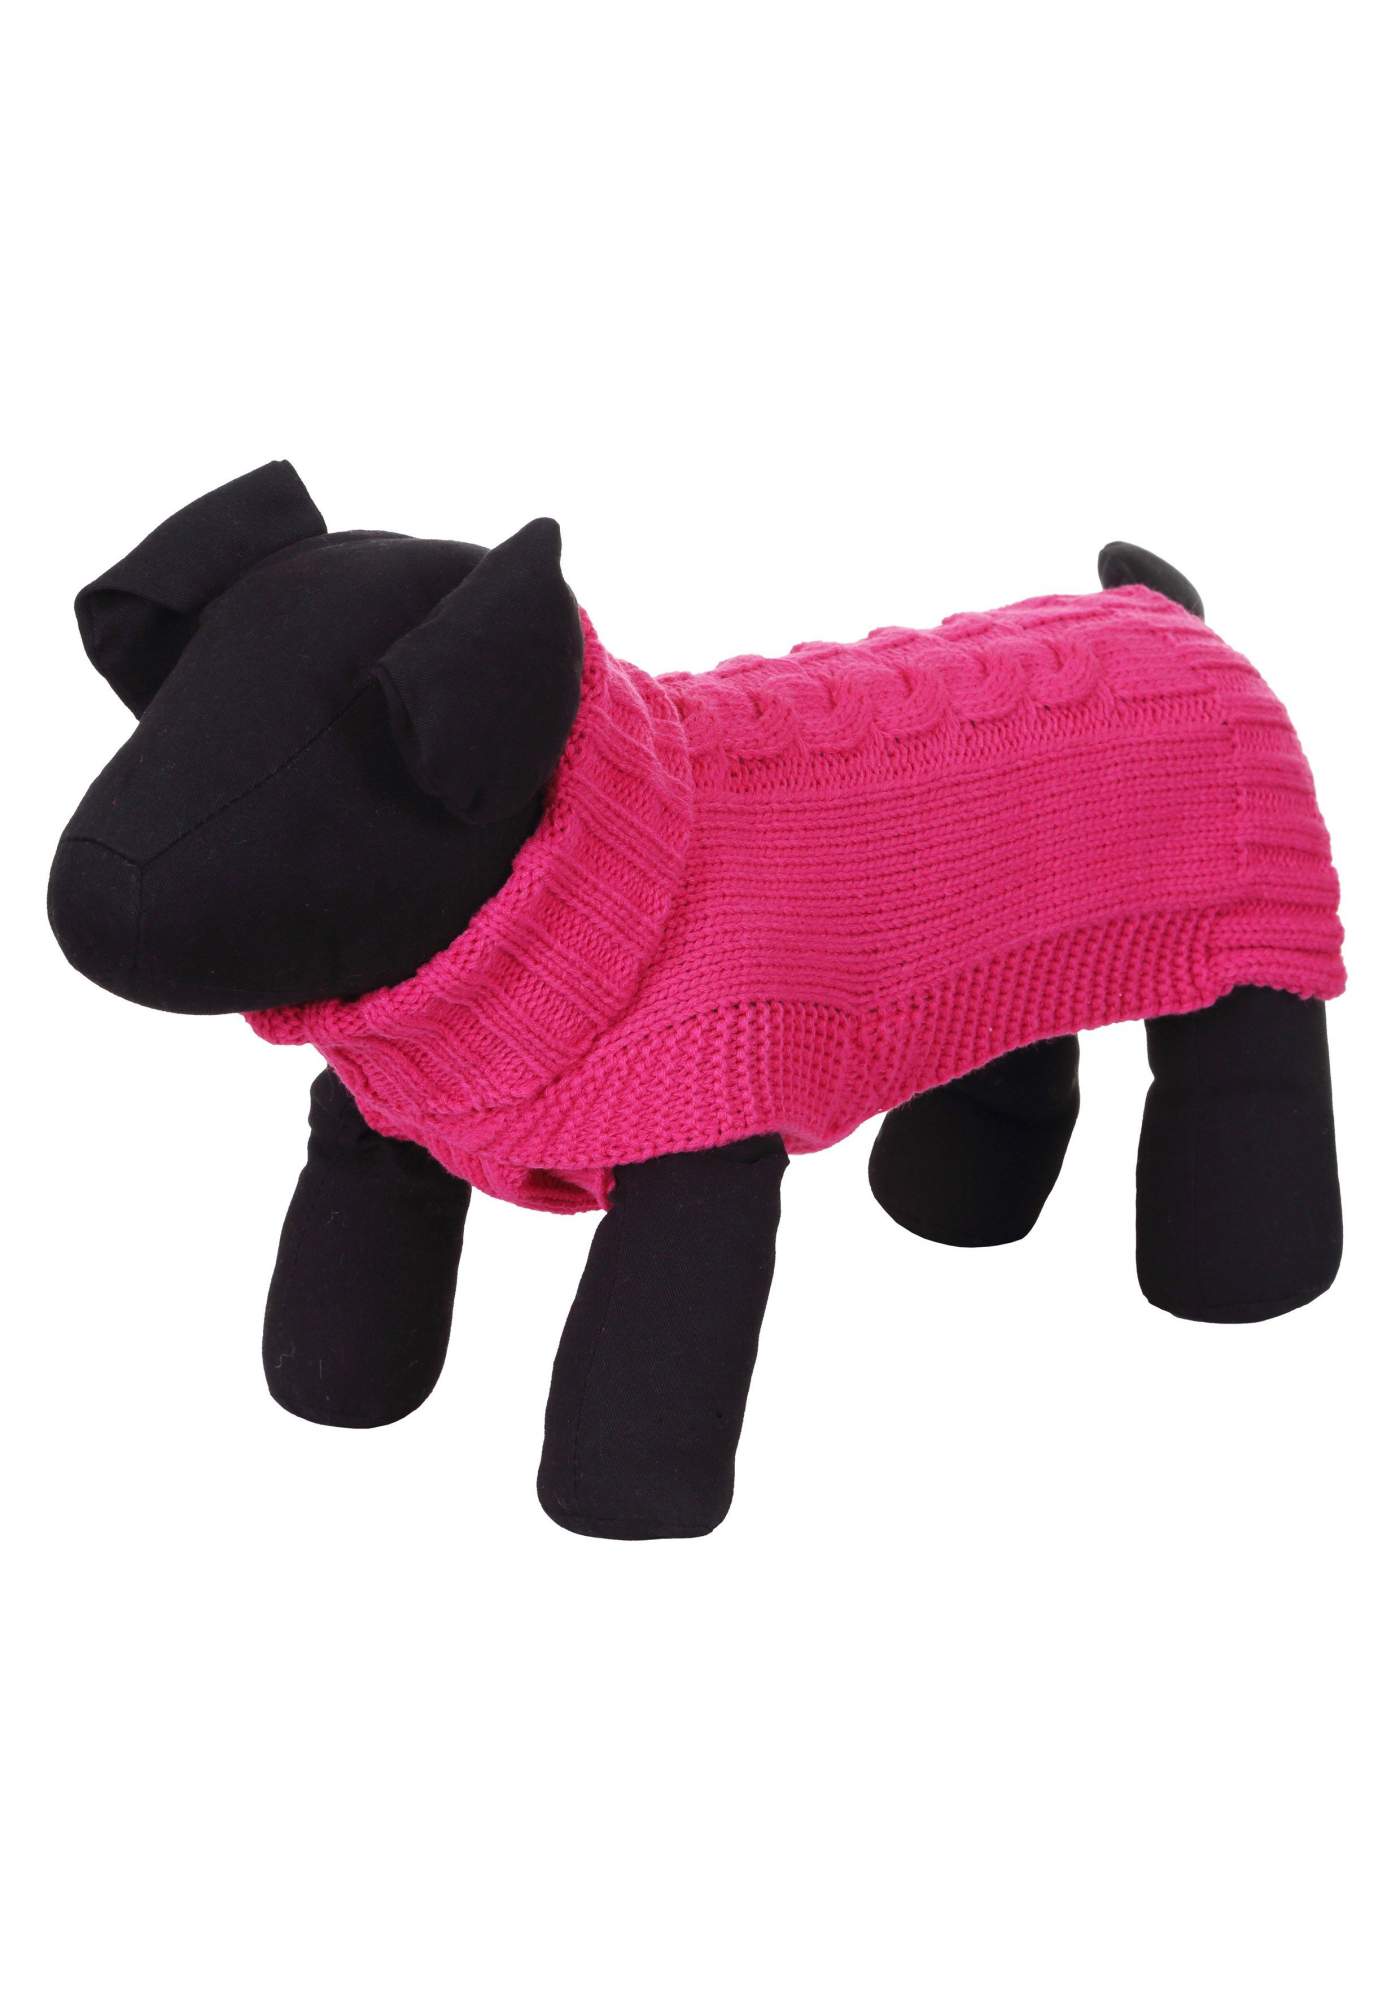 Свитер для собак RUKKA Wooly Knitwear размер L розовый 43см